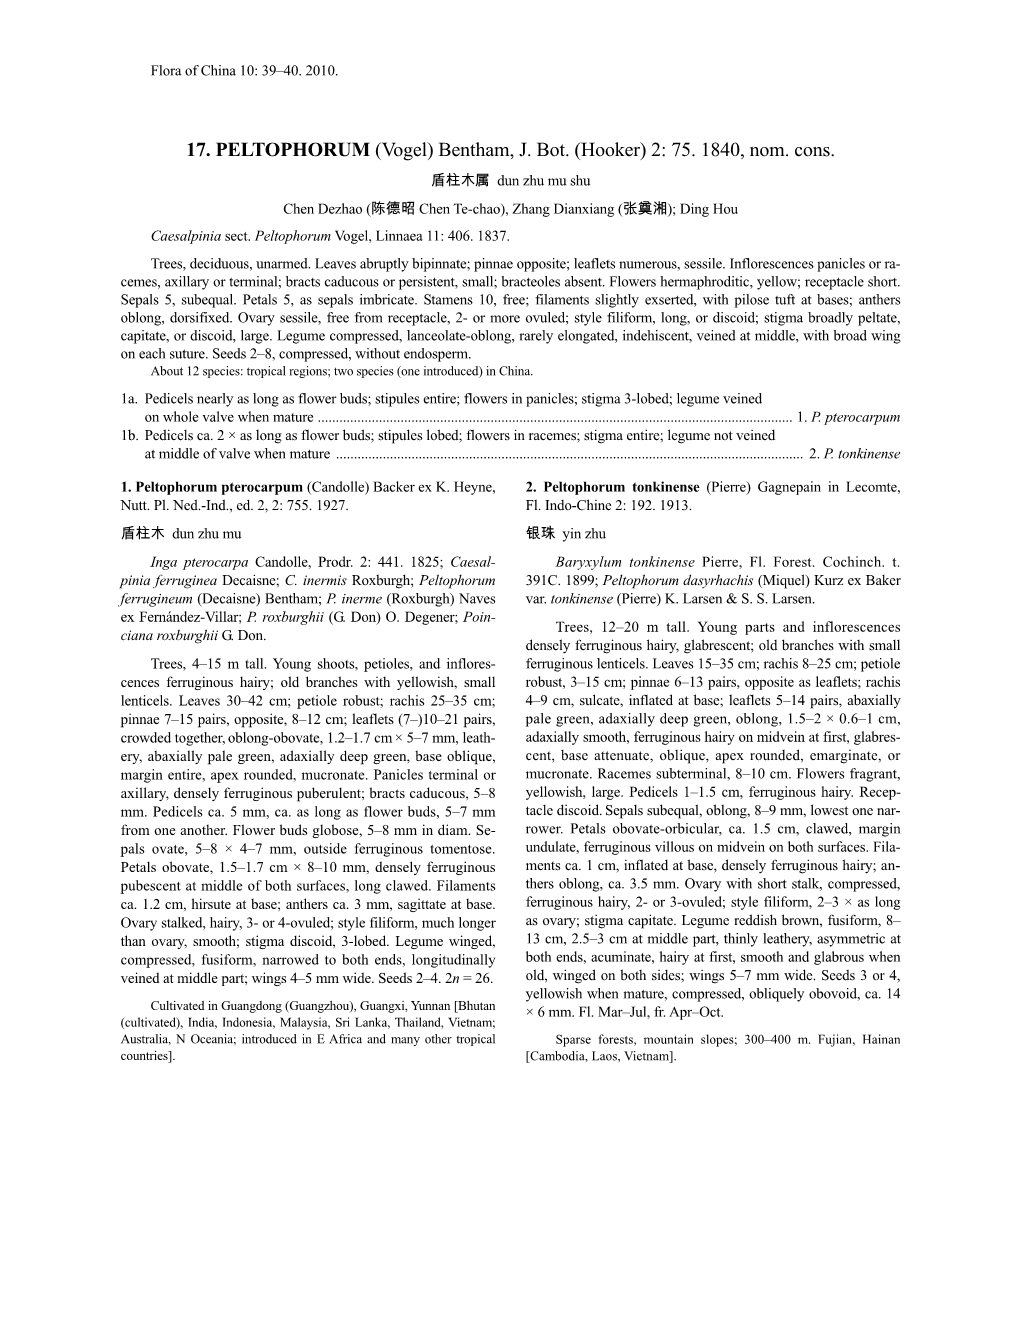 Peltophorum (PDF)